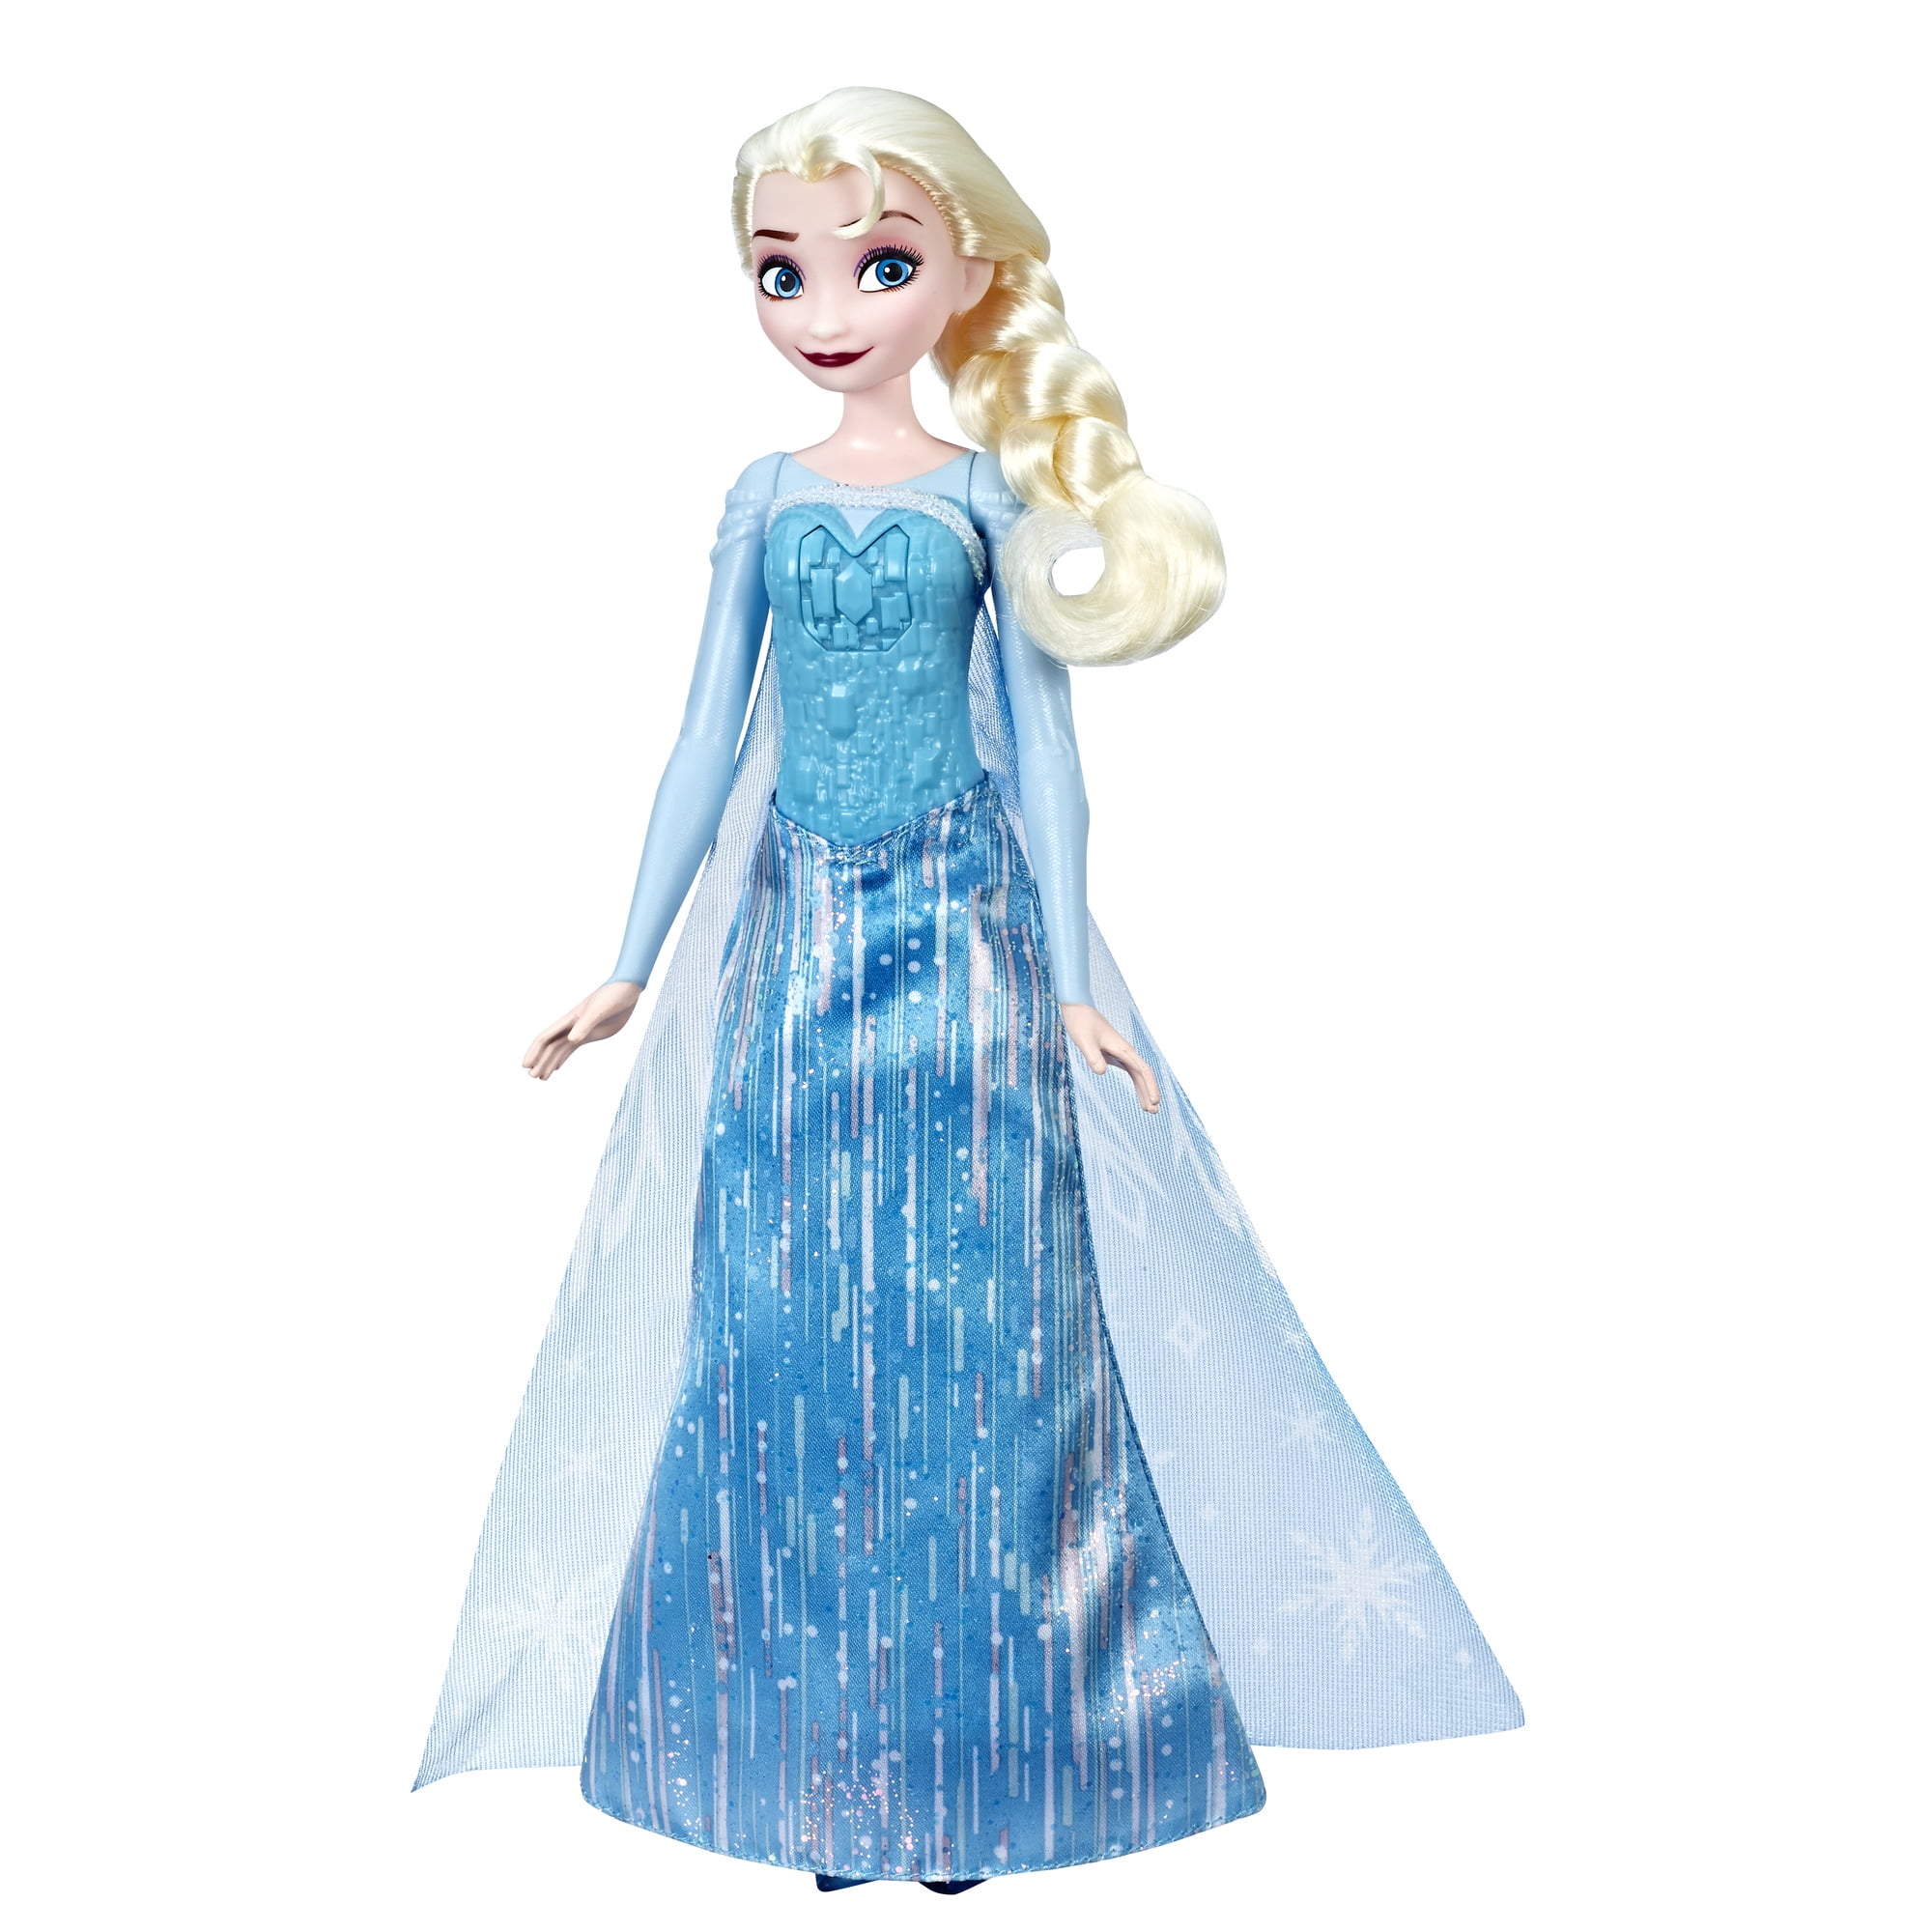 New "Let it Go" 30" Disney Frozen Giant Singing Elsa Plush Toy 